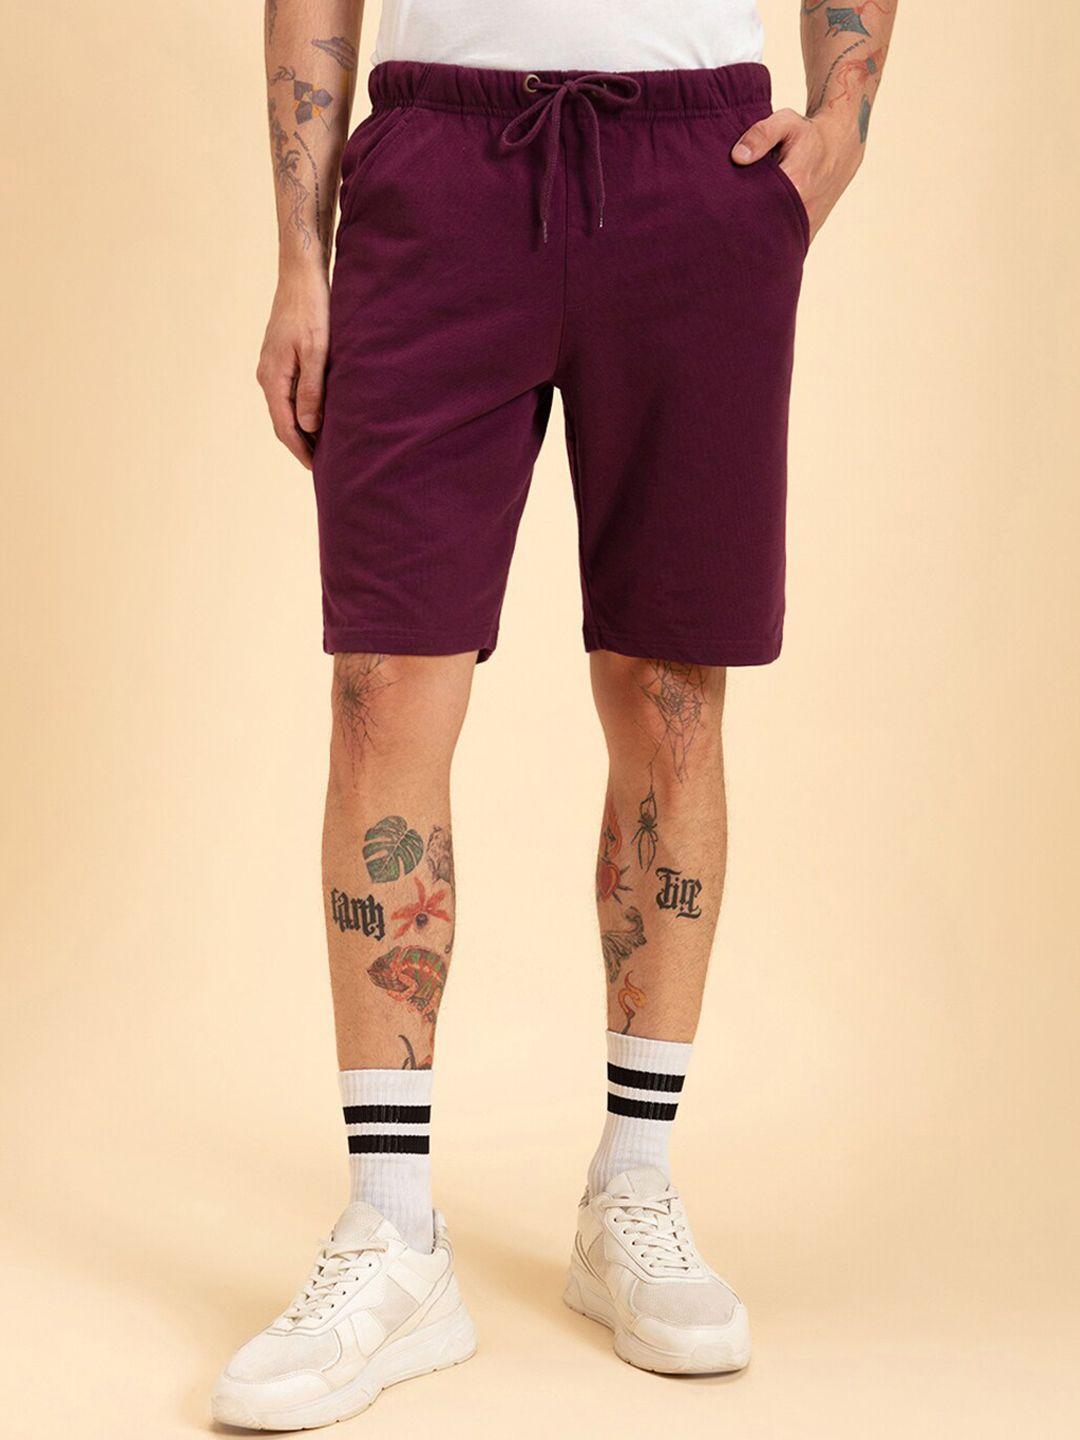 bewakoof-men-purple-mid-rise-shorts